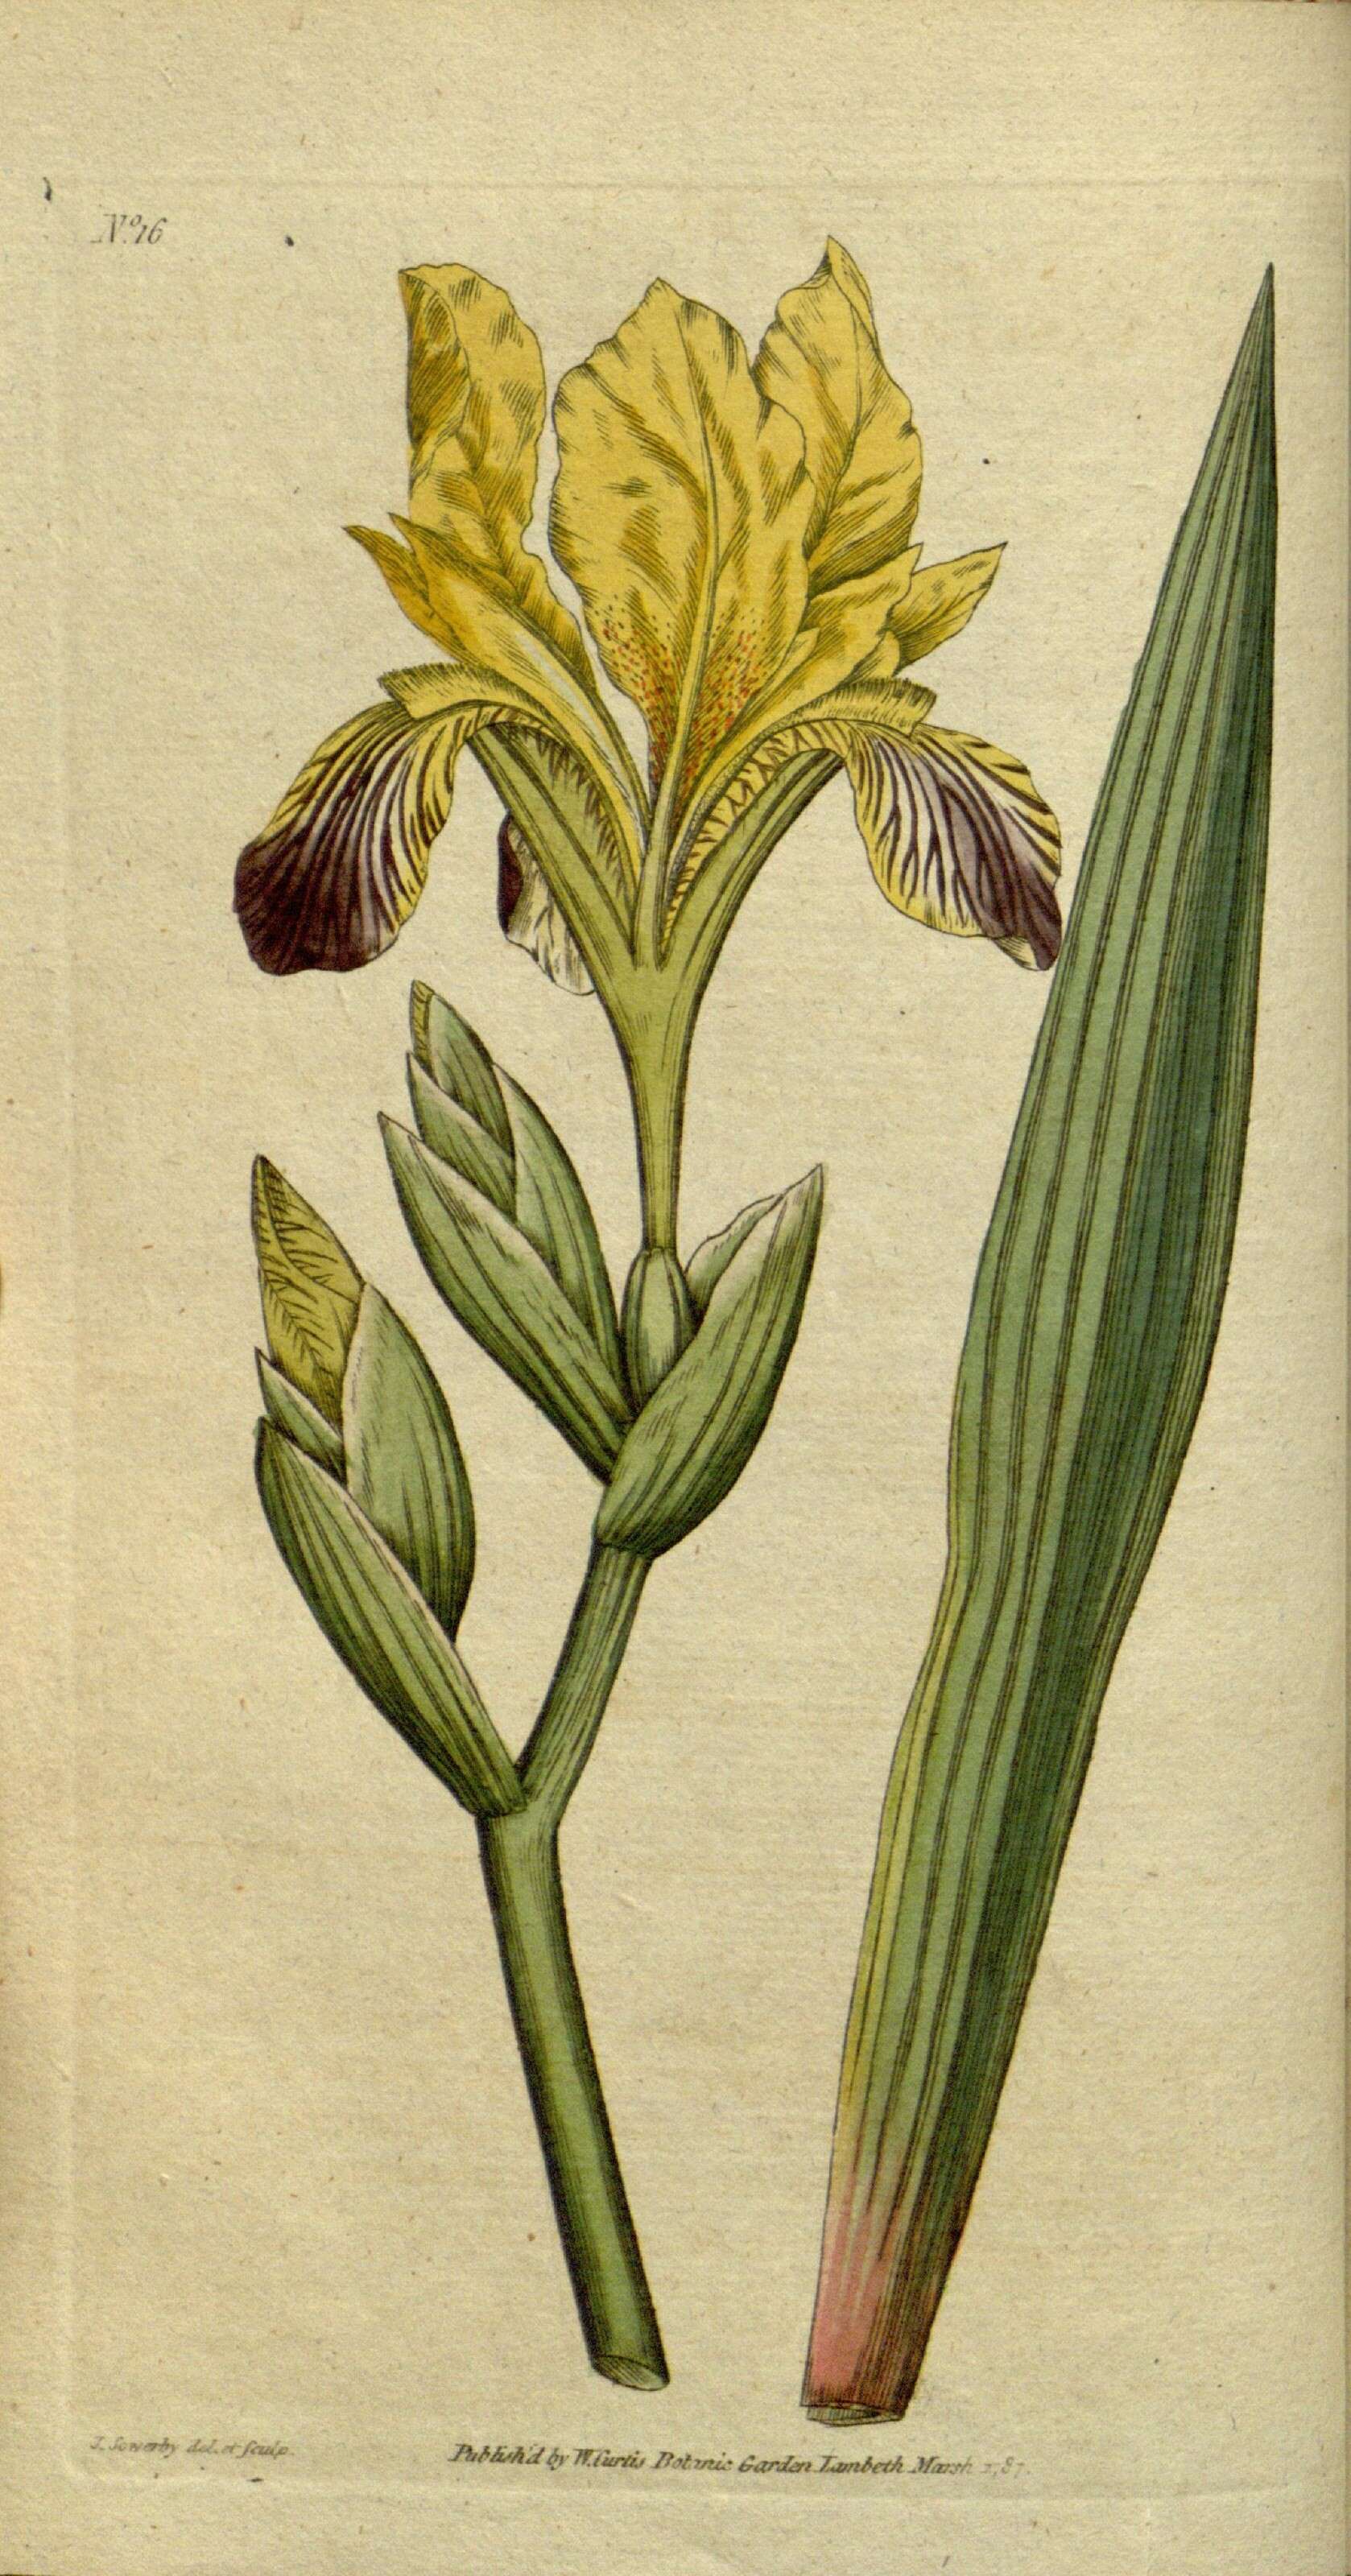 Image of Hungarian iris